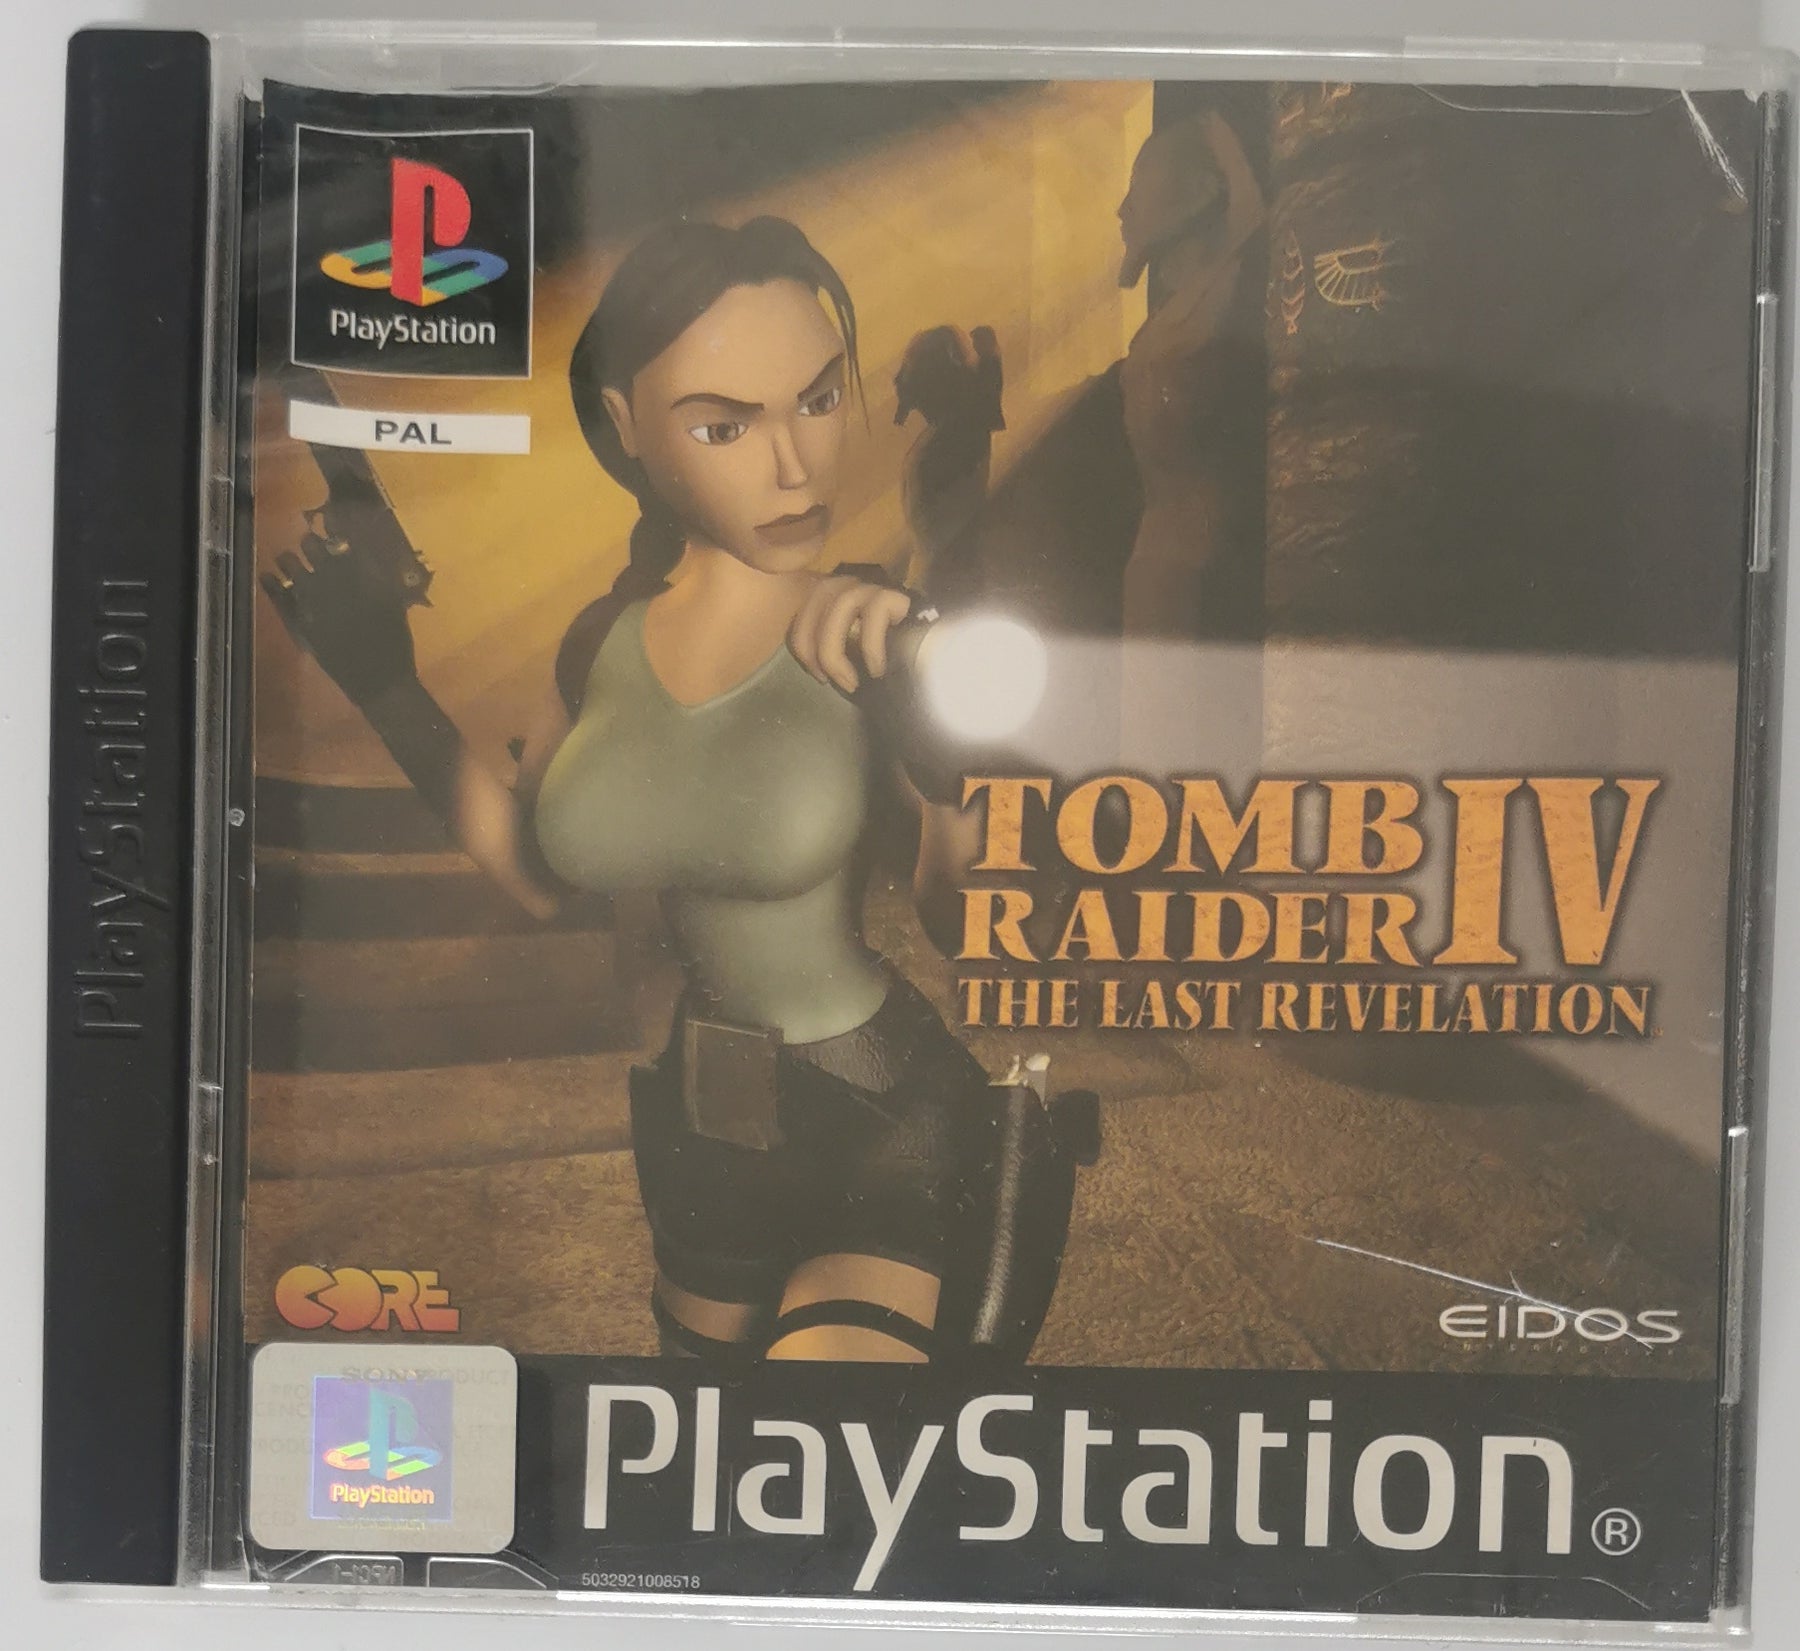 Tomb raider the last revelation UK Playstation PAL (Playstation 1) [Sehr Gut]